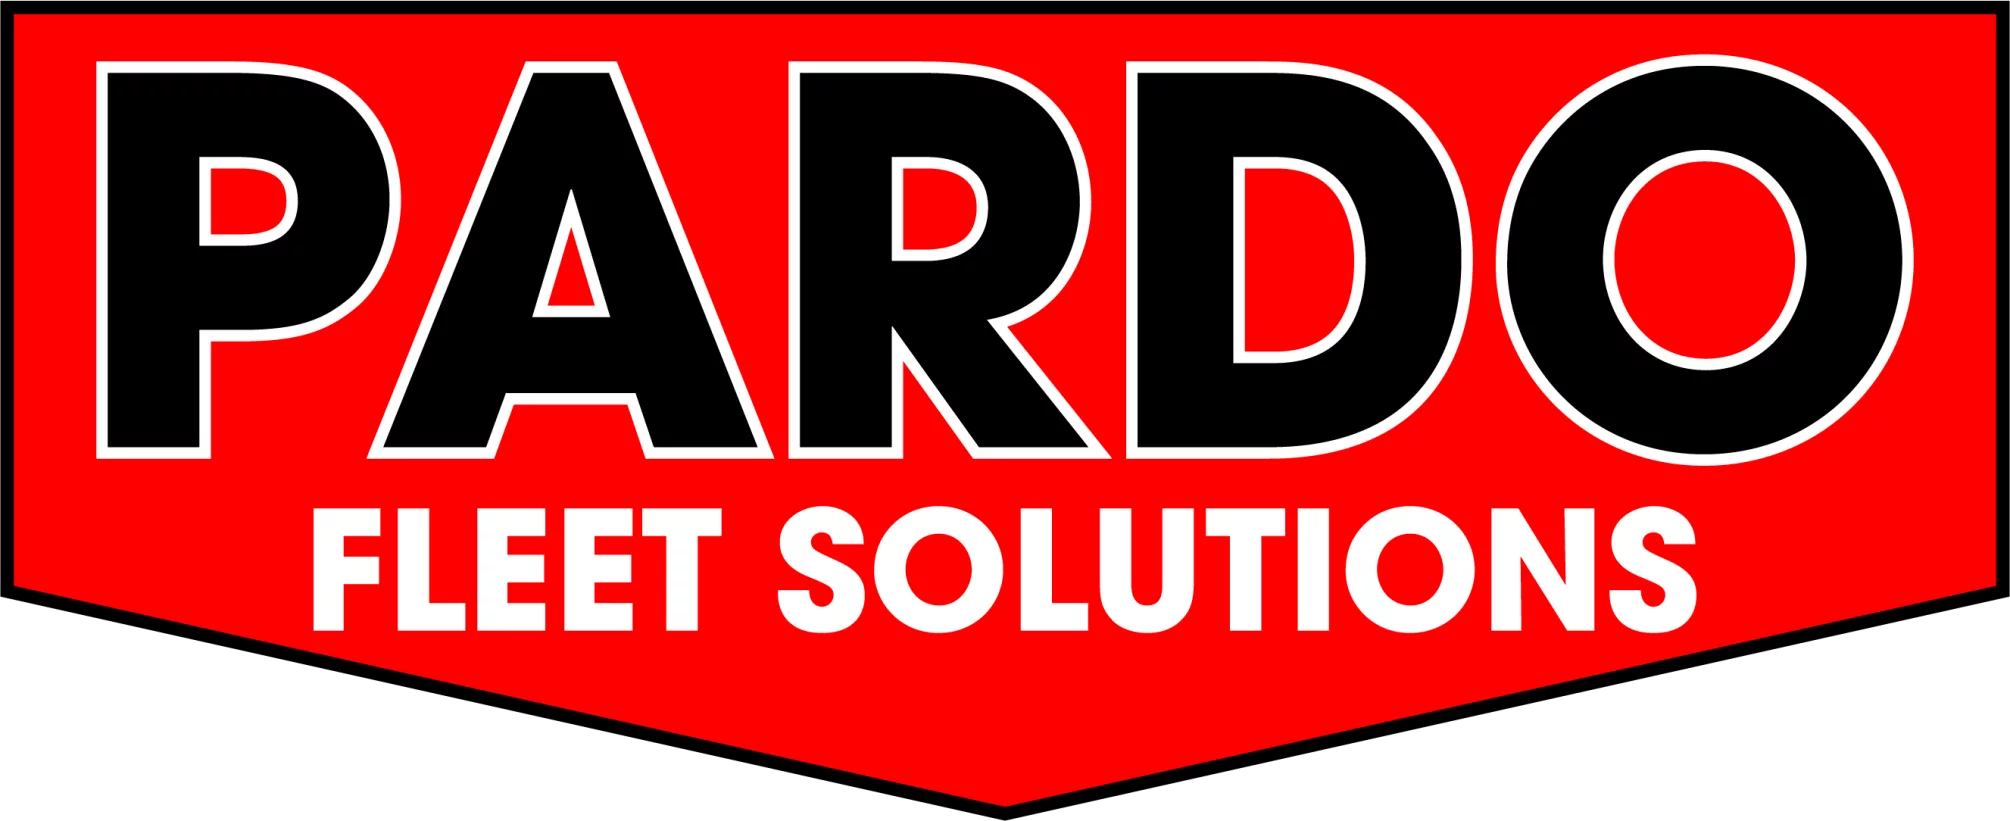 Pardo fleet Solutions Logo